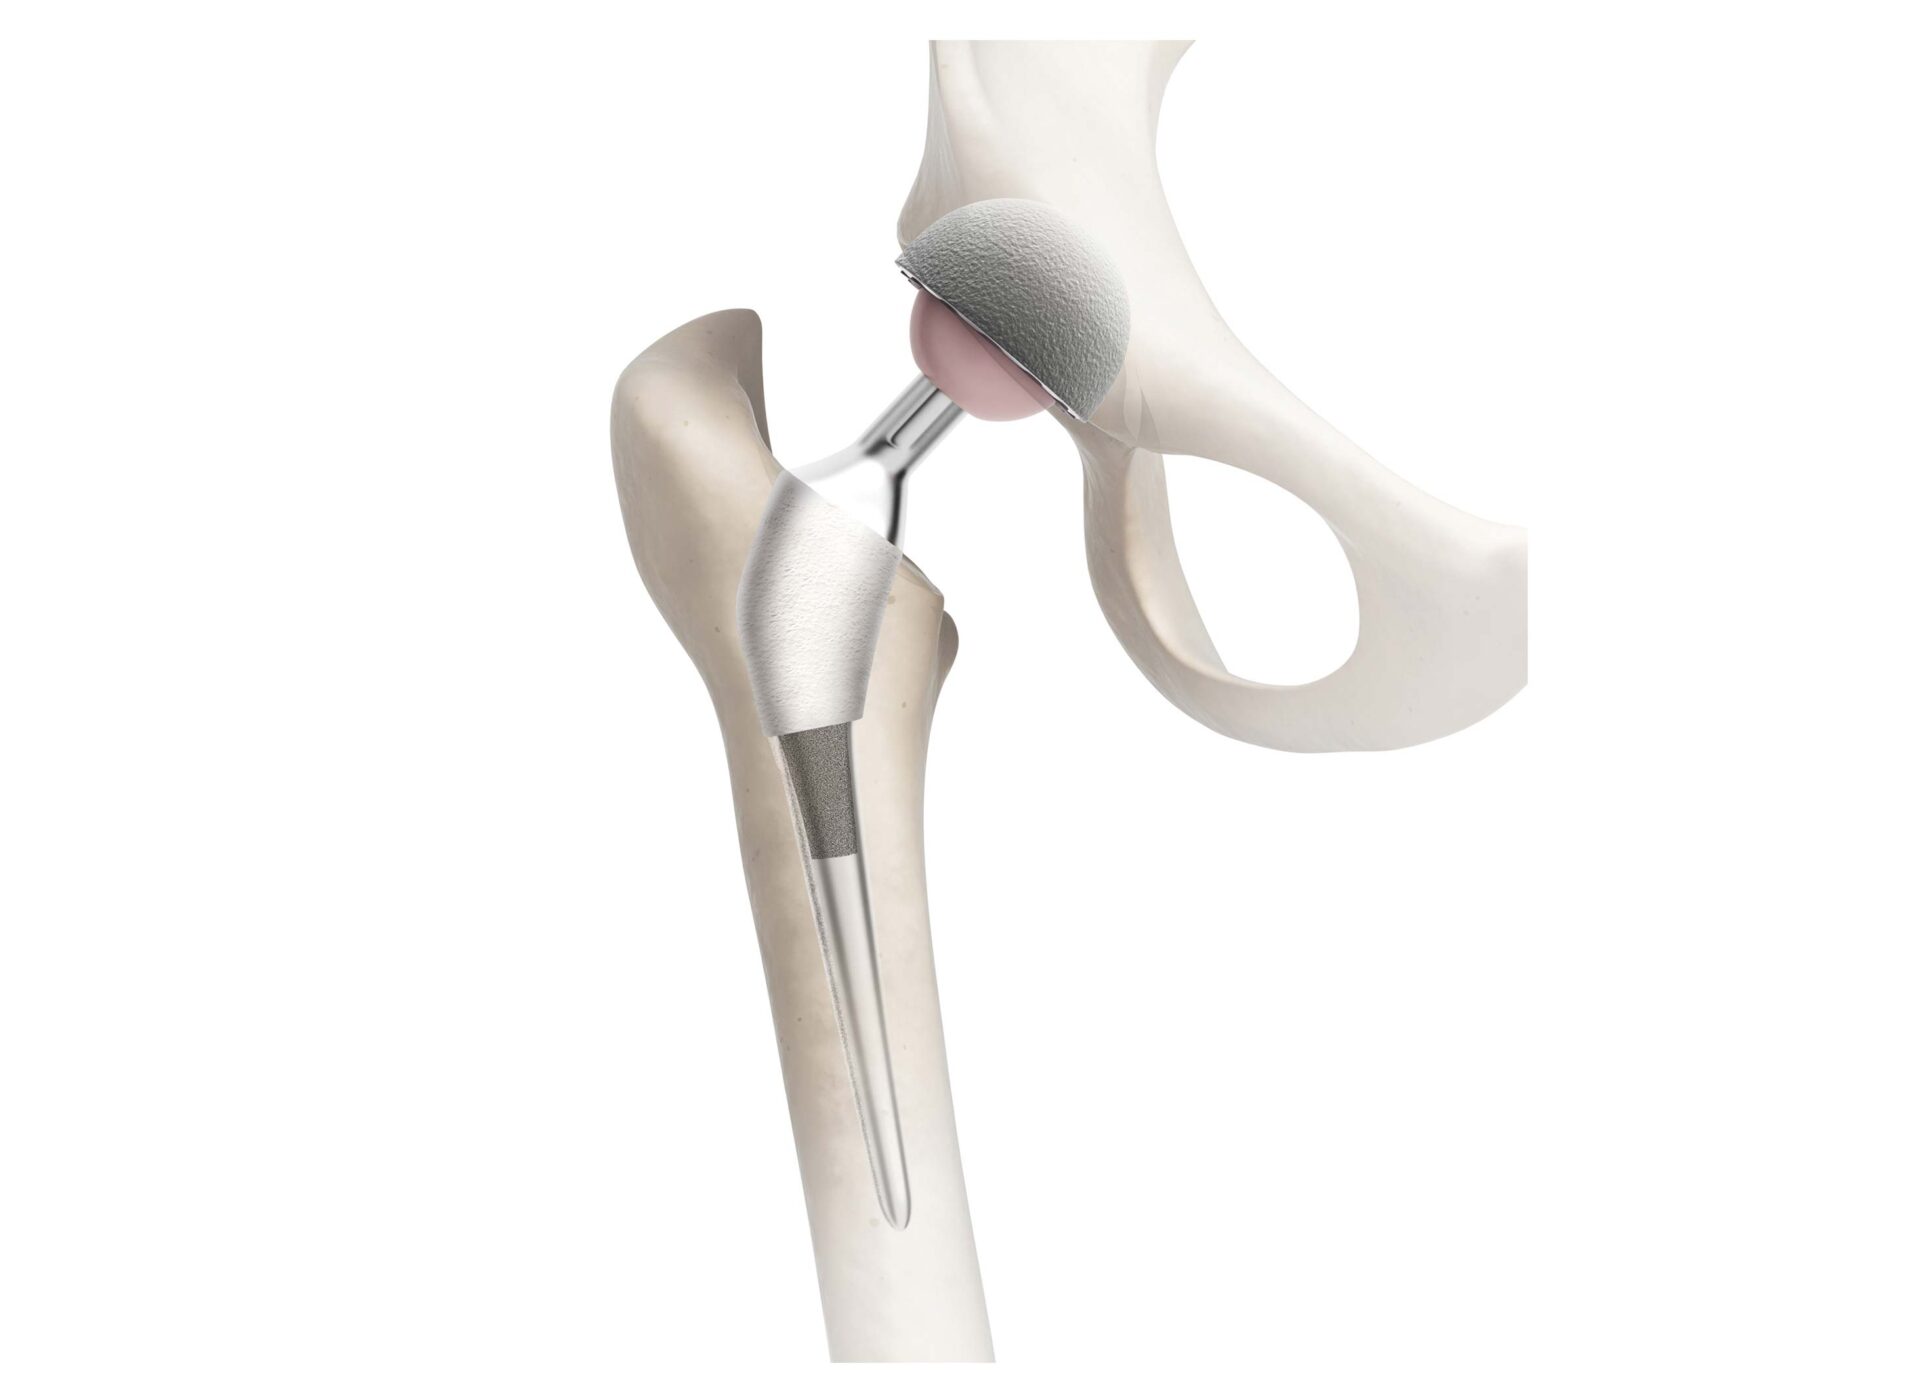 Medical Orthopedic Implant Forgings Market